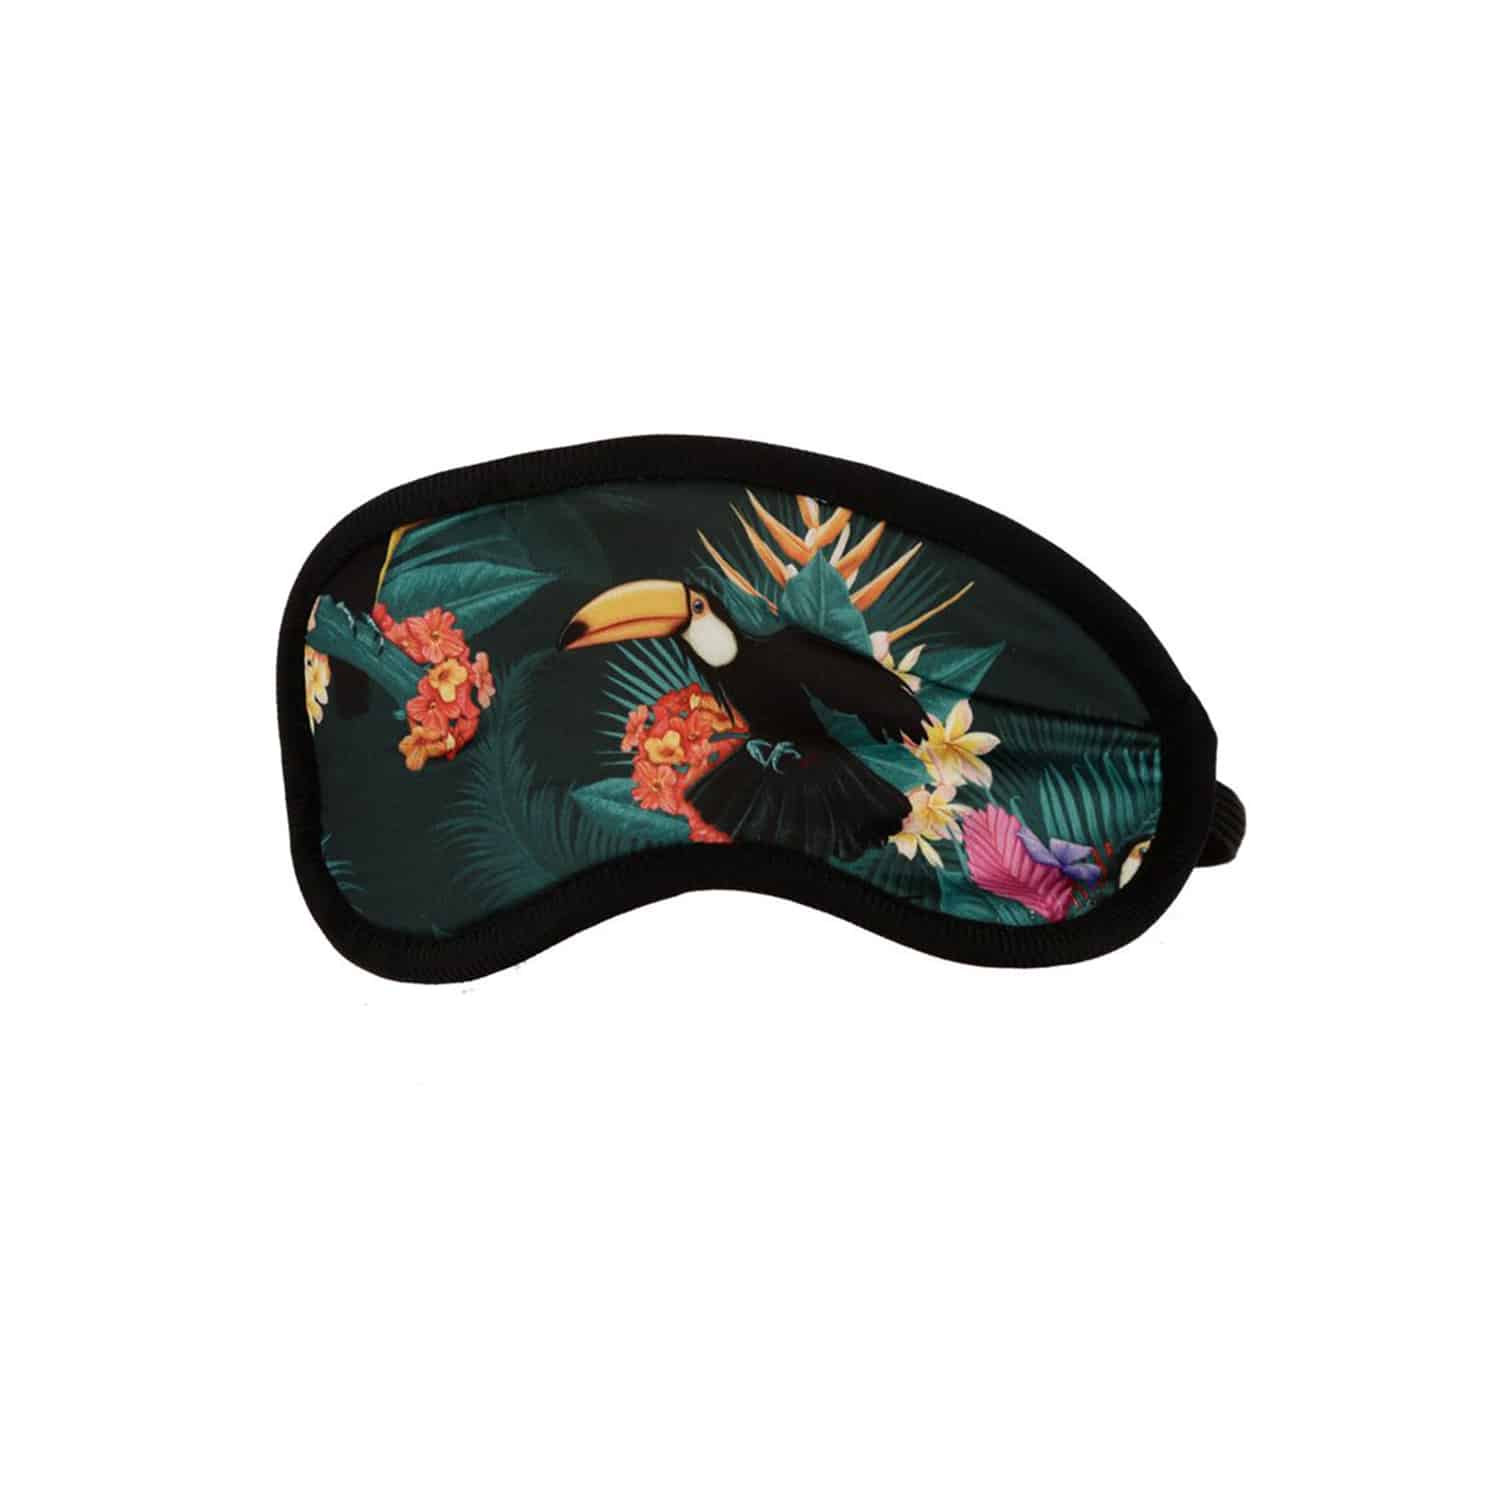 Relaxeazzz Toucan Party Travel Pillow & Eye Mask Set